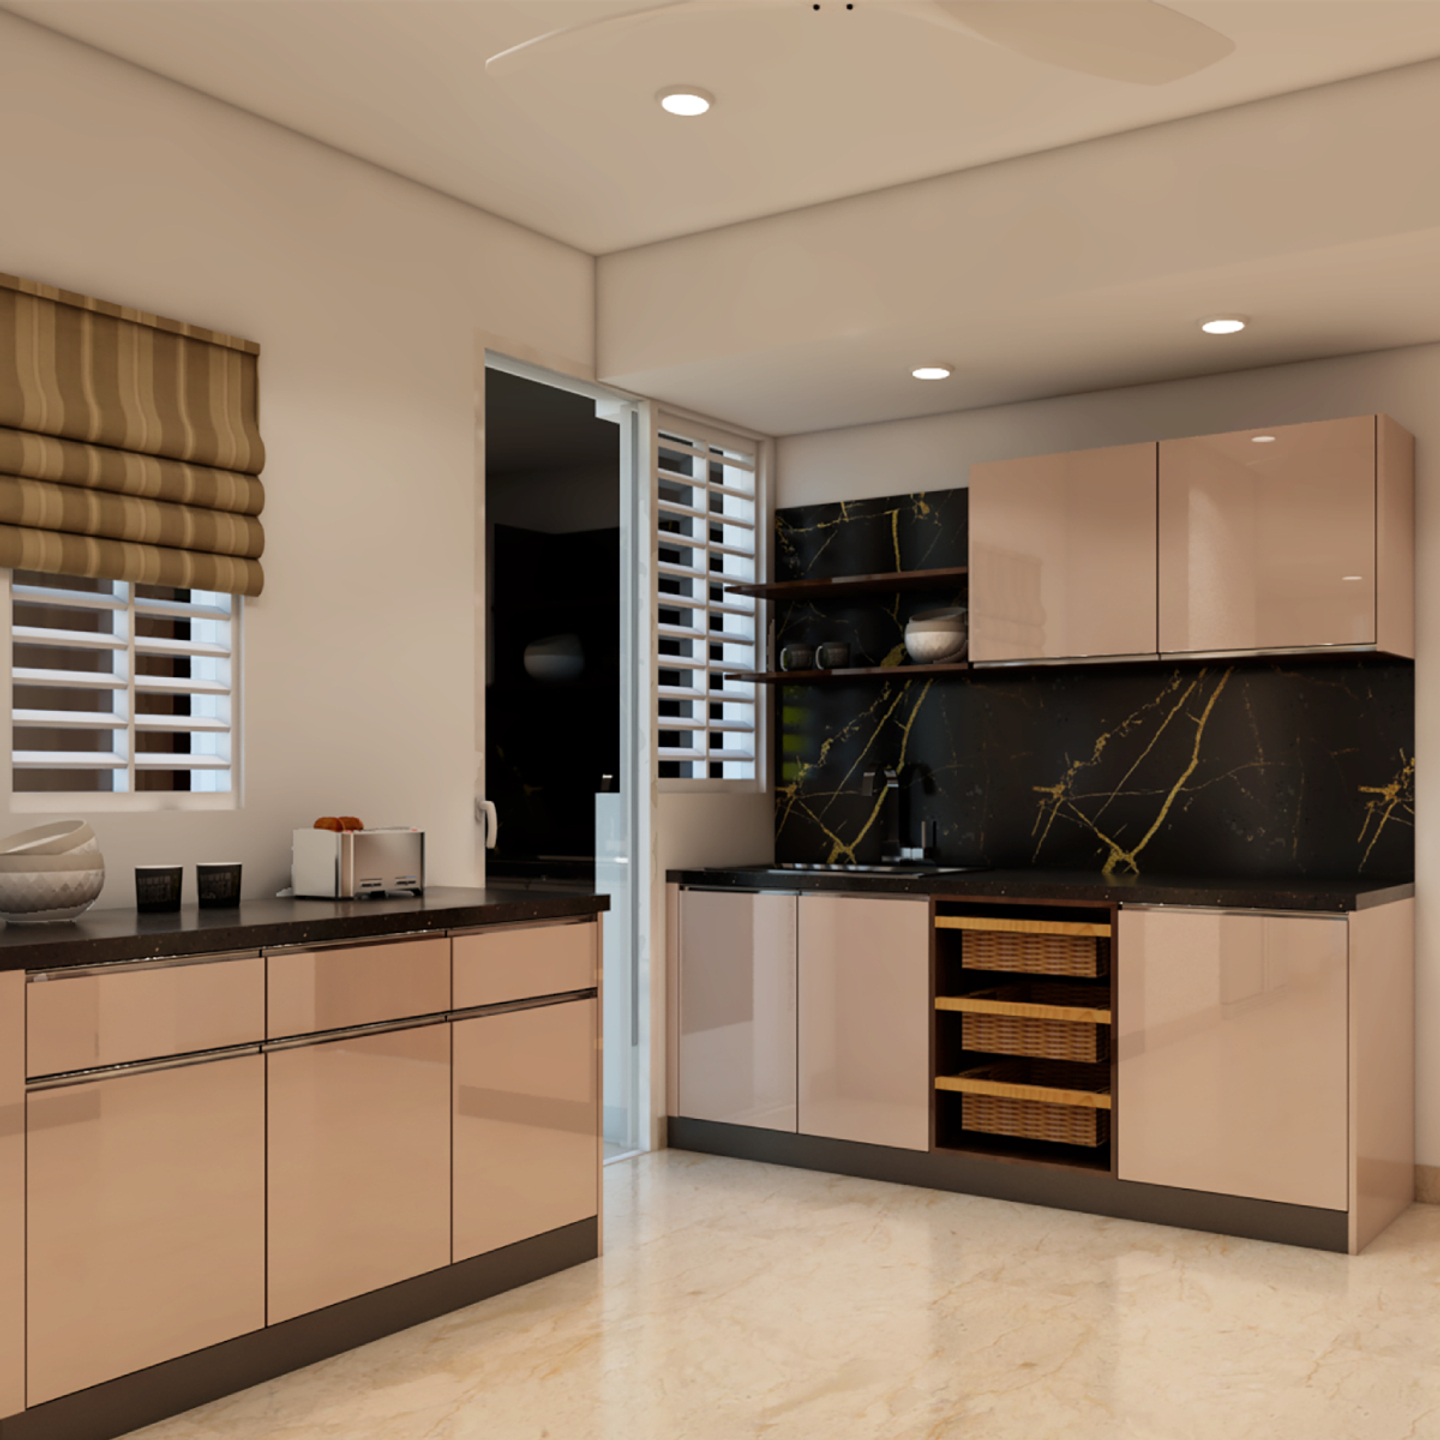 Contemporary Modular Kitchen Design With Beige Shutters